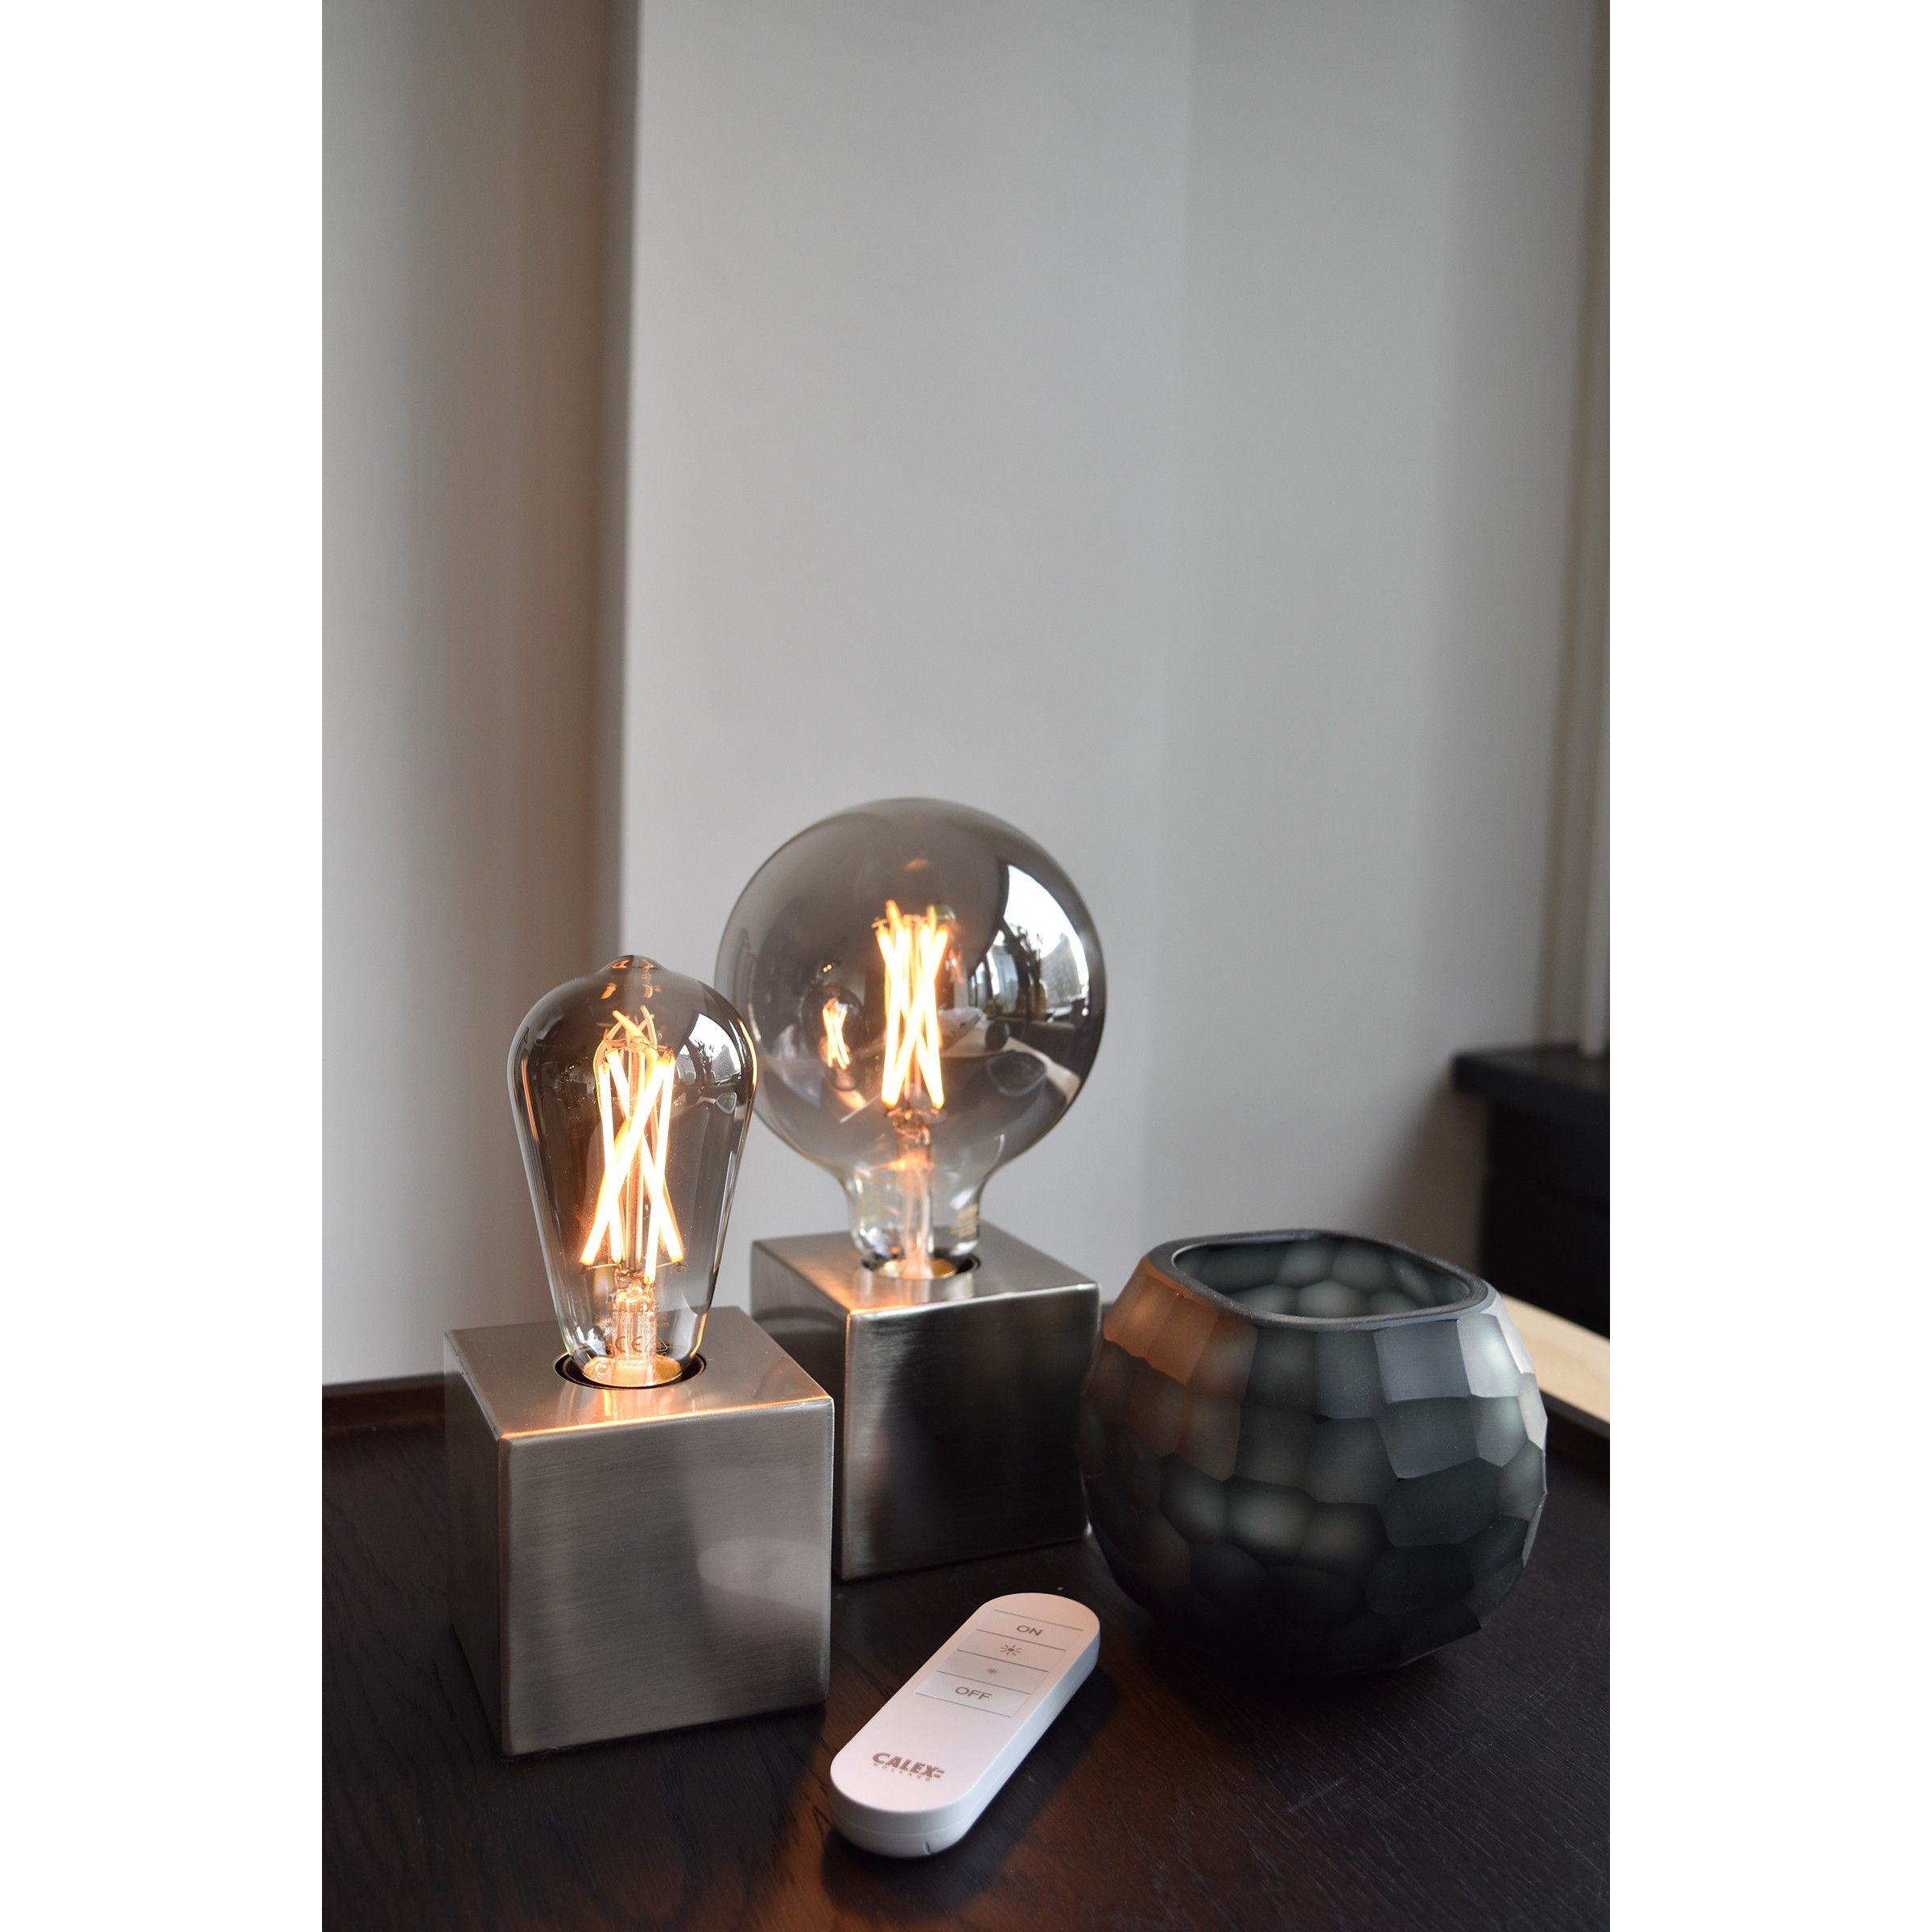 musicus zich zorgen maken Verlichting Calex Smart LED lamp - Ø 6,4 x 14 cm - E27 - 7W - dimfunctie via app - 1800  tot 3000K - white ambiance - gerookt | Lichtkoning